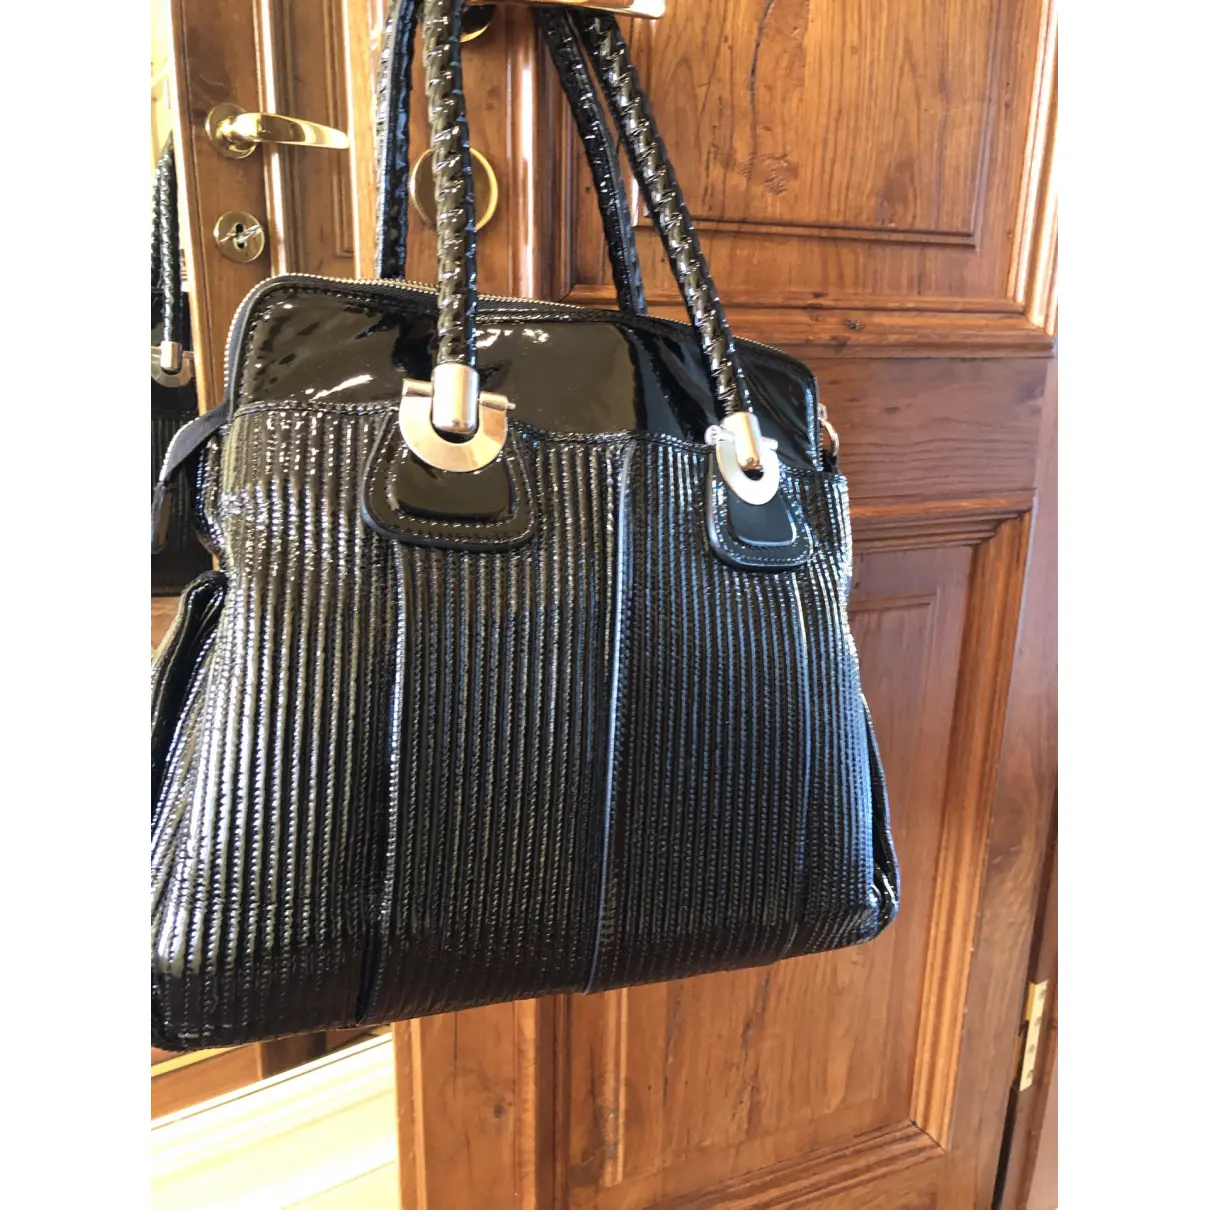 Patent leather handbag Chloé - Vintage